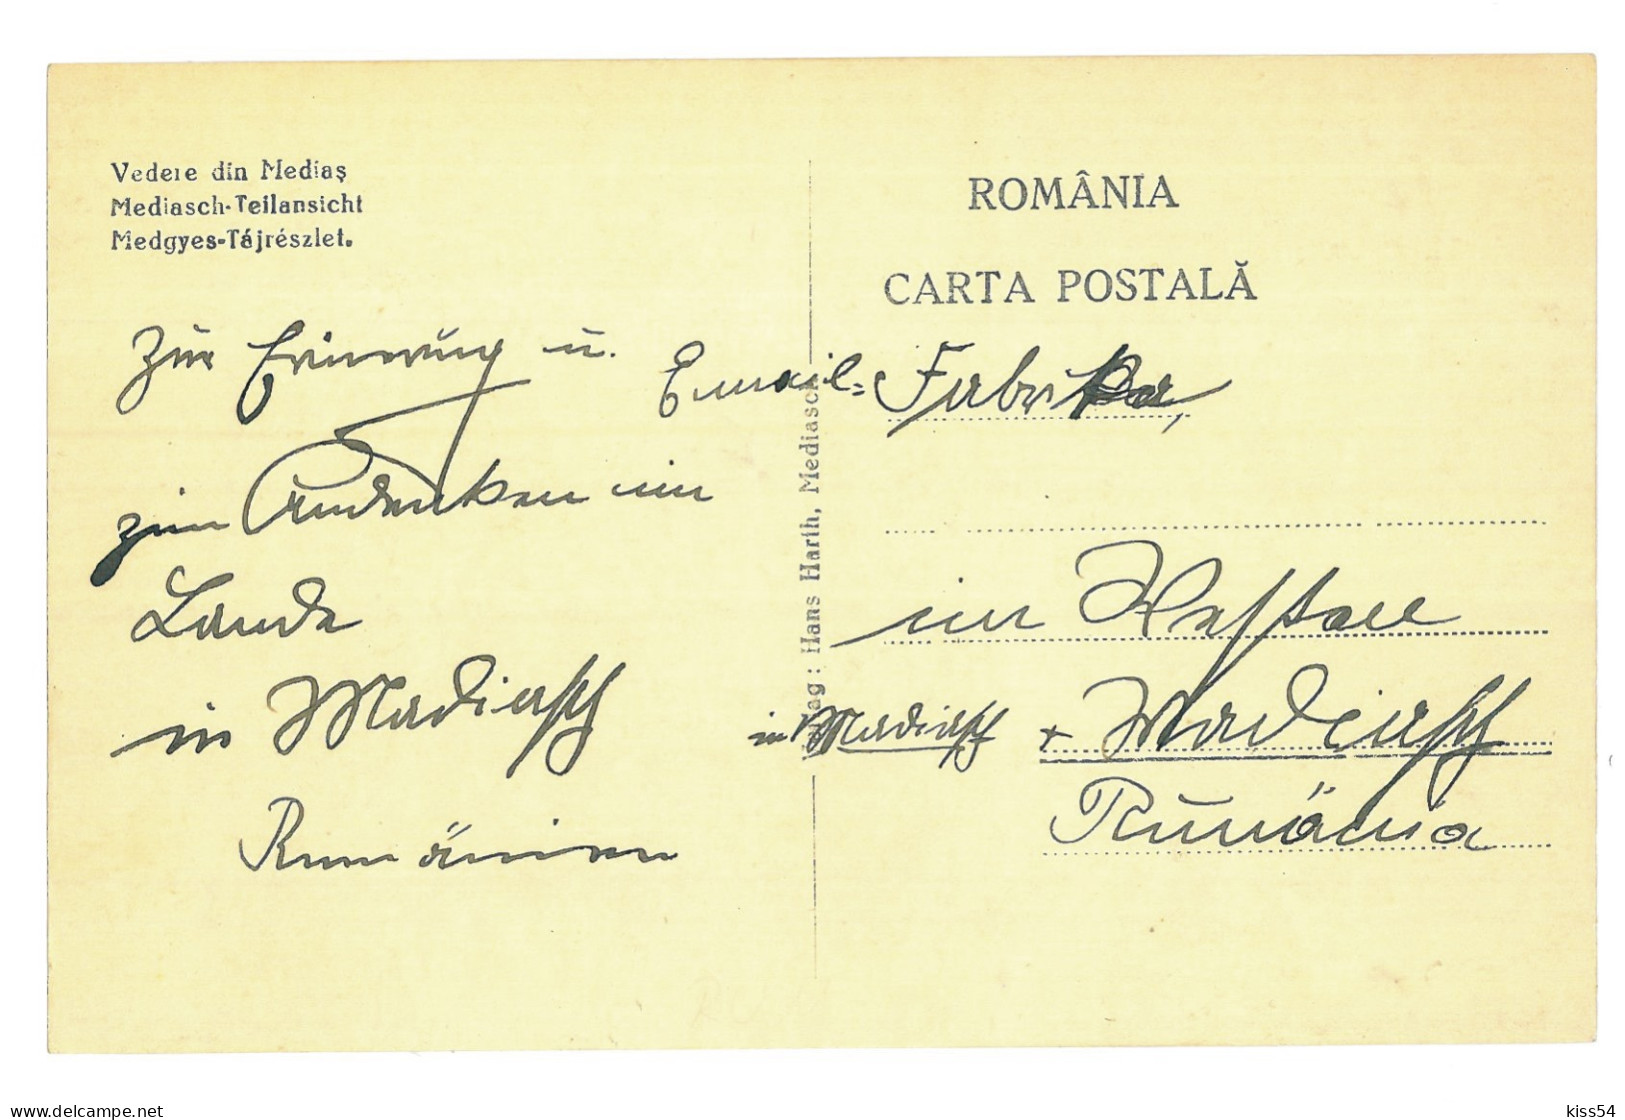 RO 74 - 22436 MEDIAS, Sibiu, Panorama, Romania - Old Postcard - Used - Rumänien